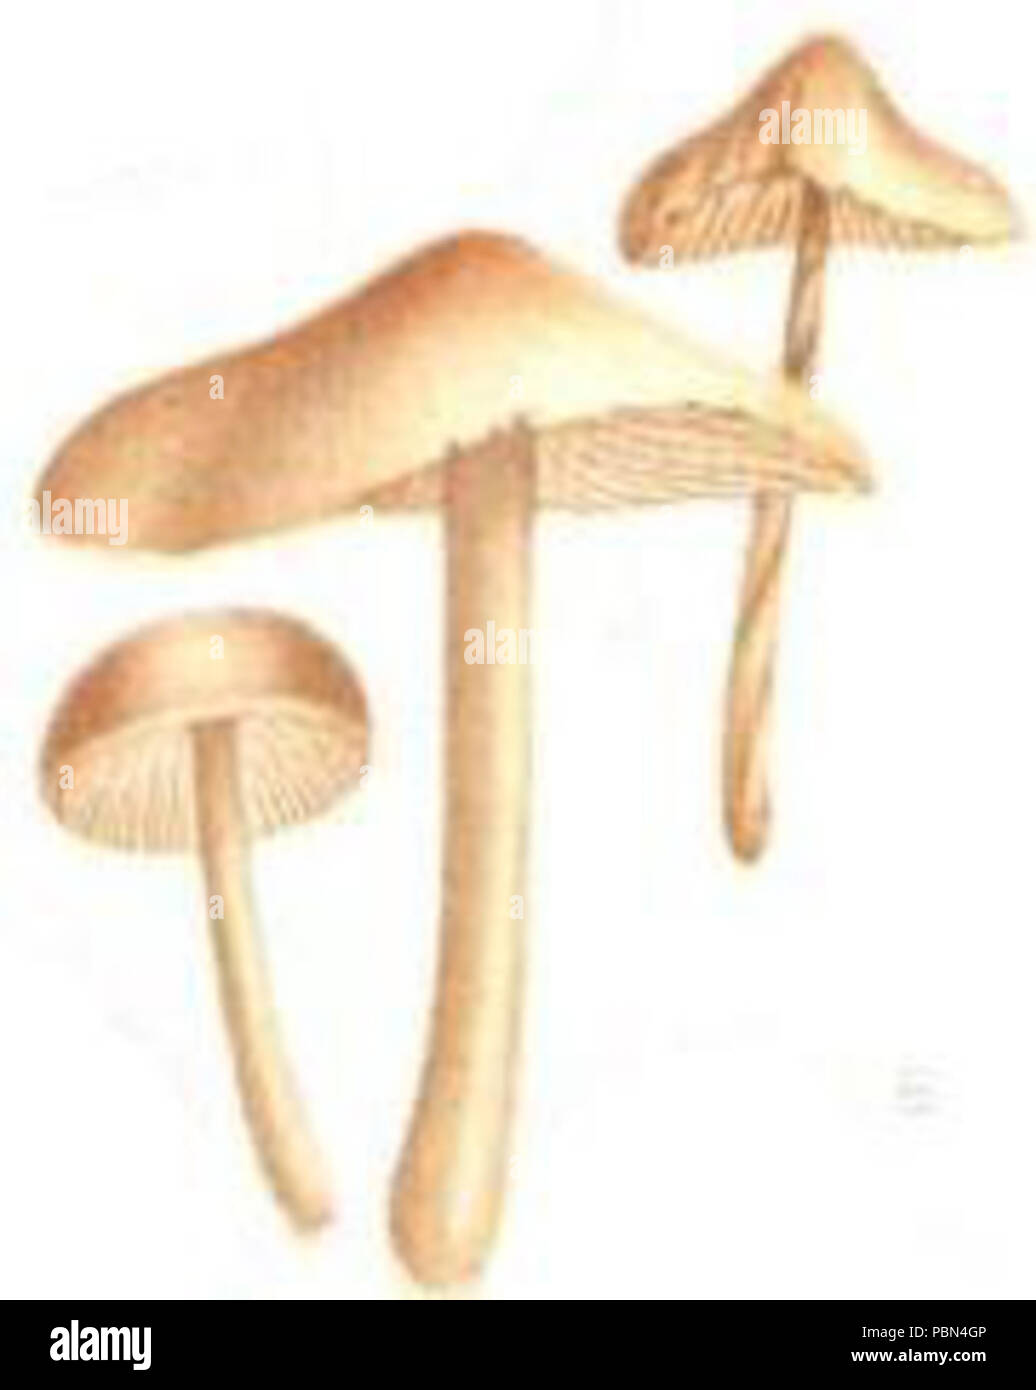 995 Marasmius oreades (Twelve edible mushrooms of the United States) Stock Photo